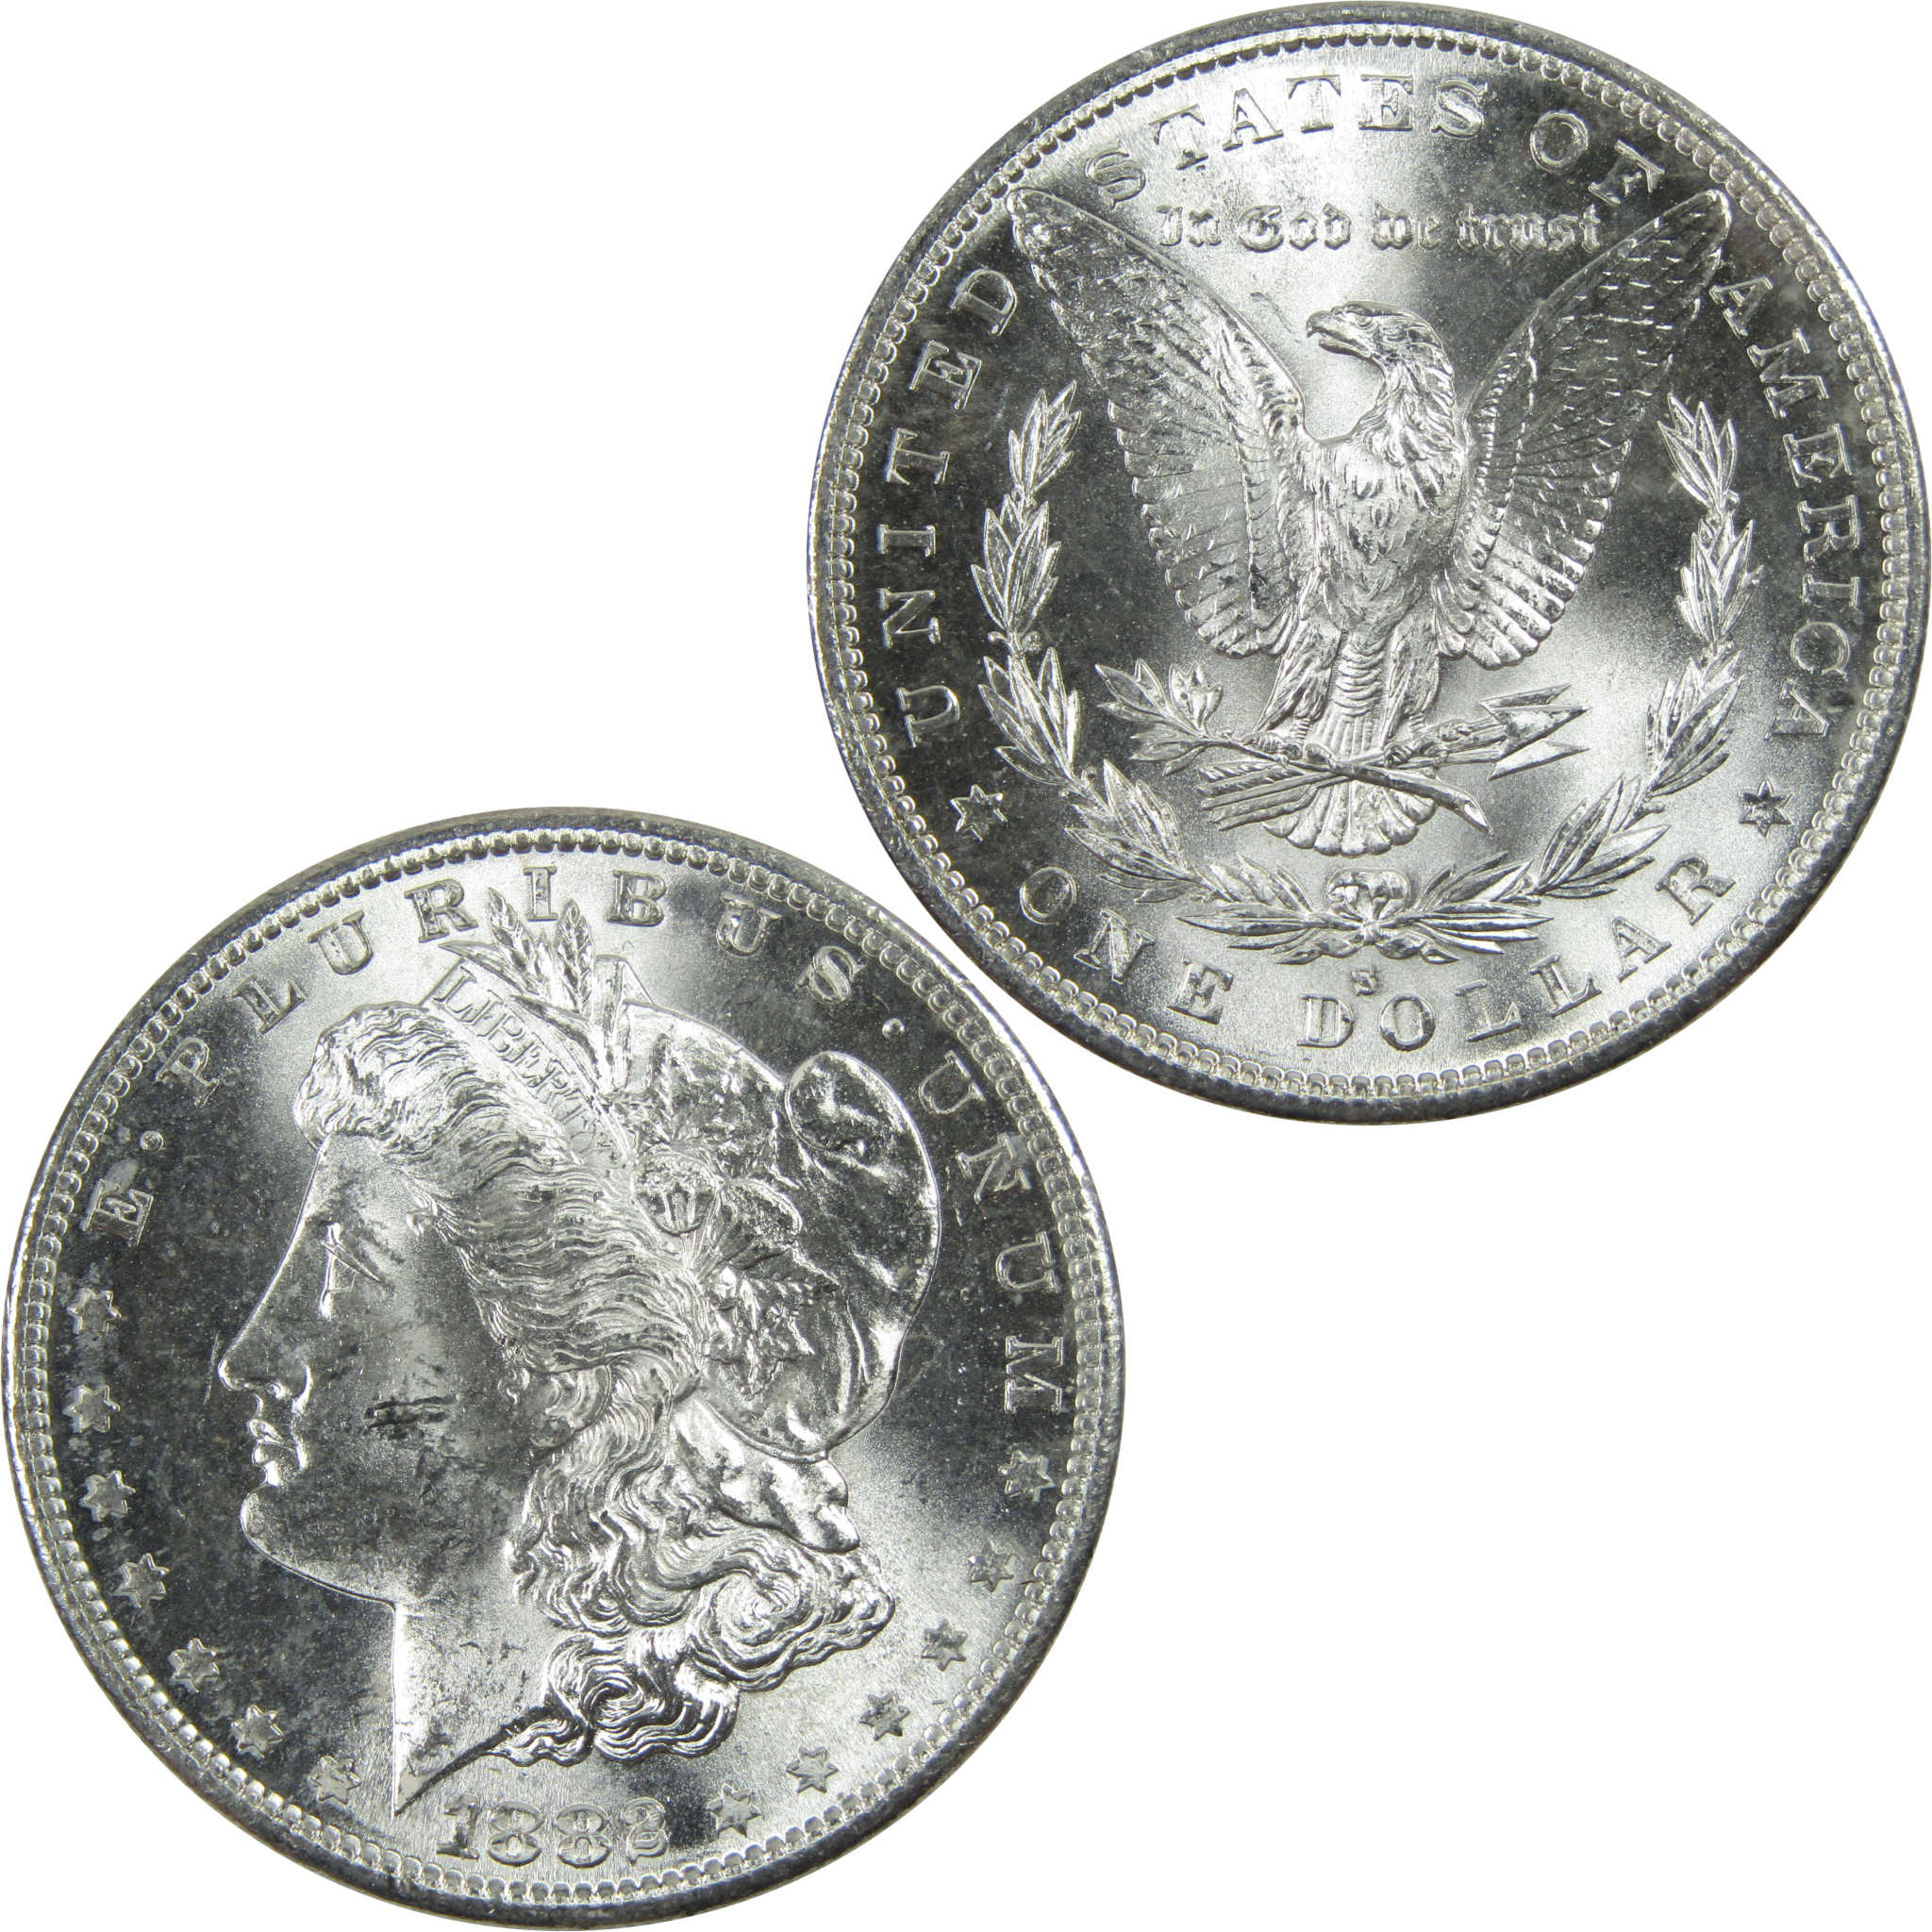 1882 S Morgan Dollar Uncirculated Silver $1 Coin SKU:I13456 - Morgan coin - Morgan silver dollar - Morgan silver dollar for sale - Profile Coins &amp; Collectibles